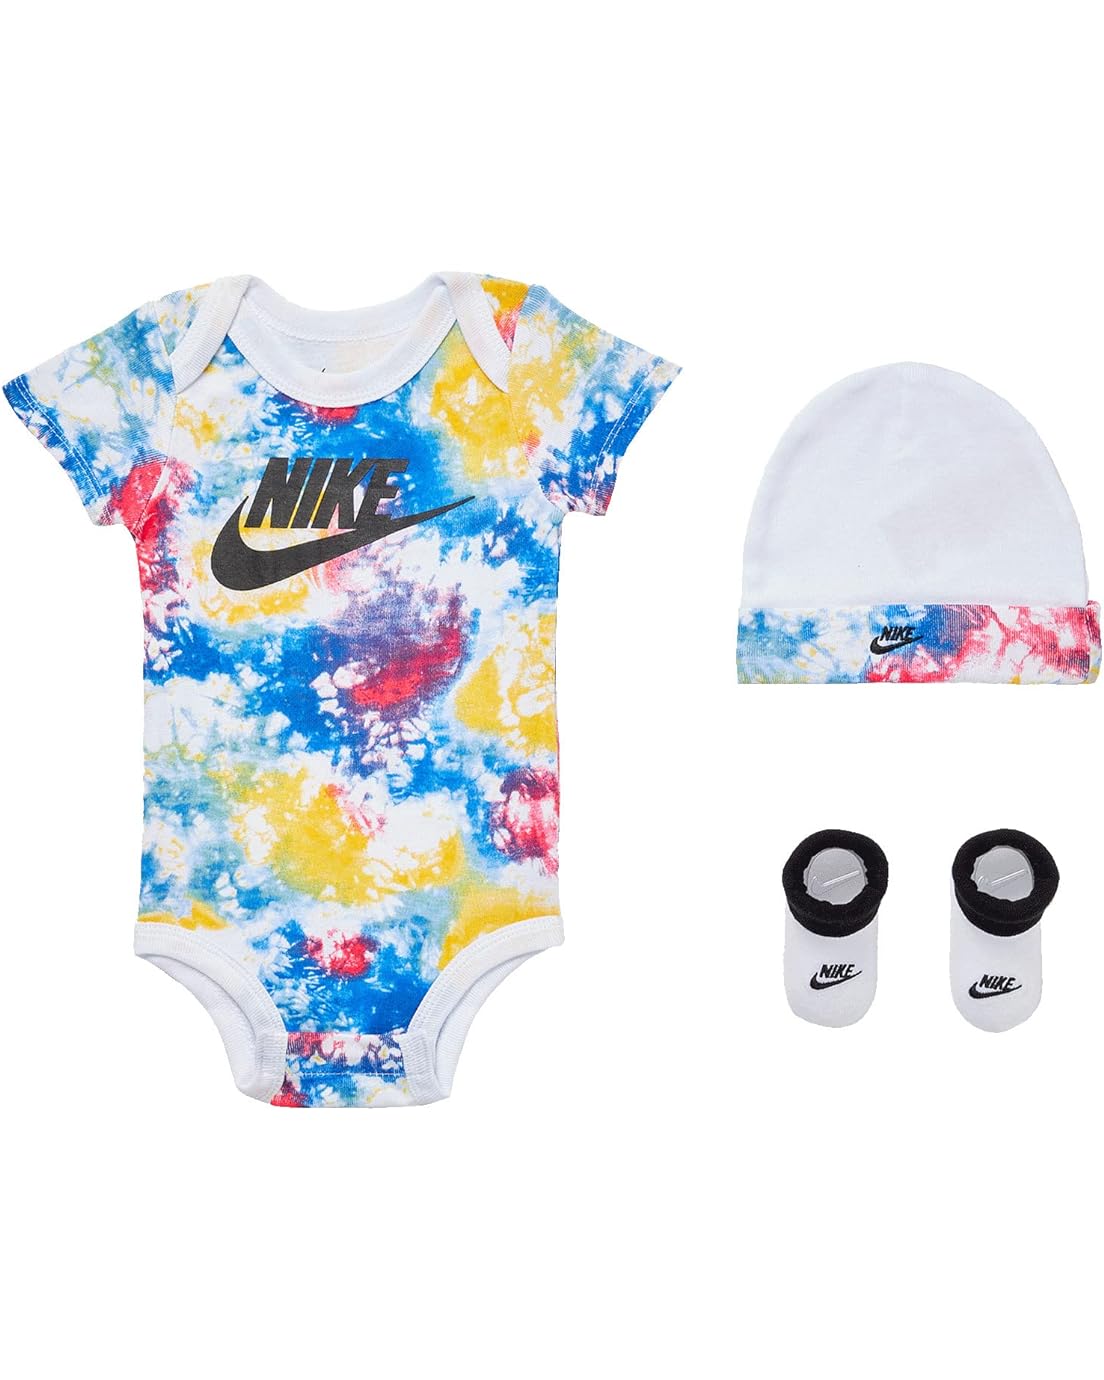 Nike Kids Tie-Dye Box Set (Infant/Toddler/Little Kids)